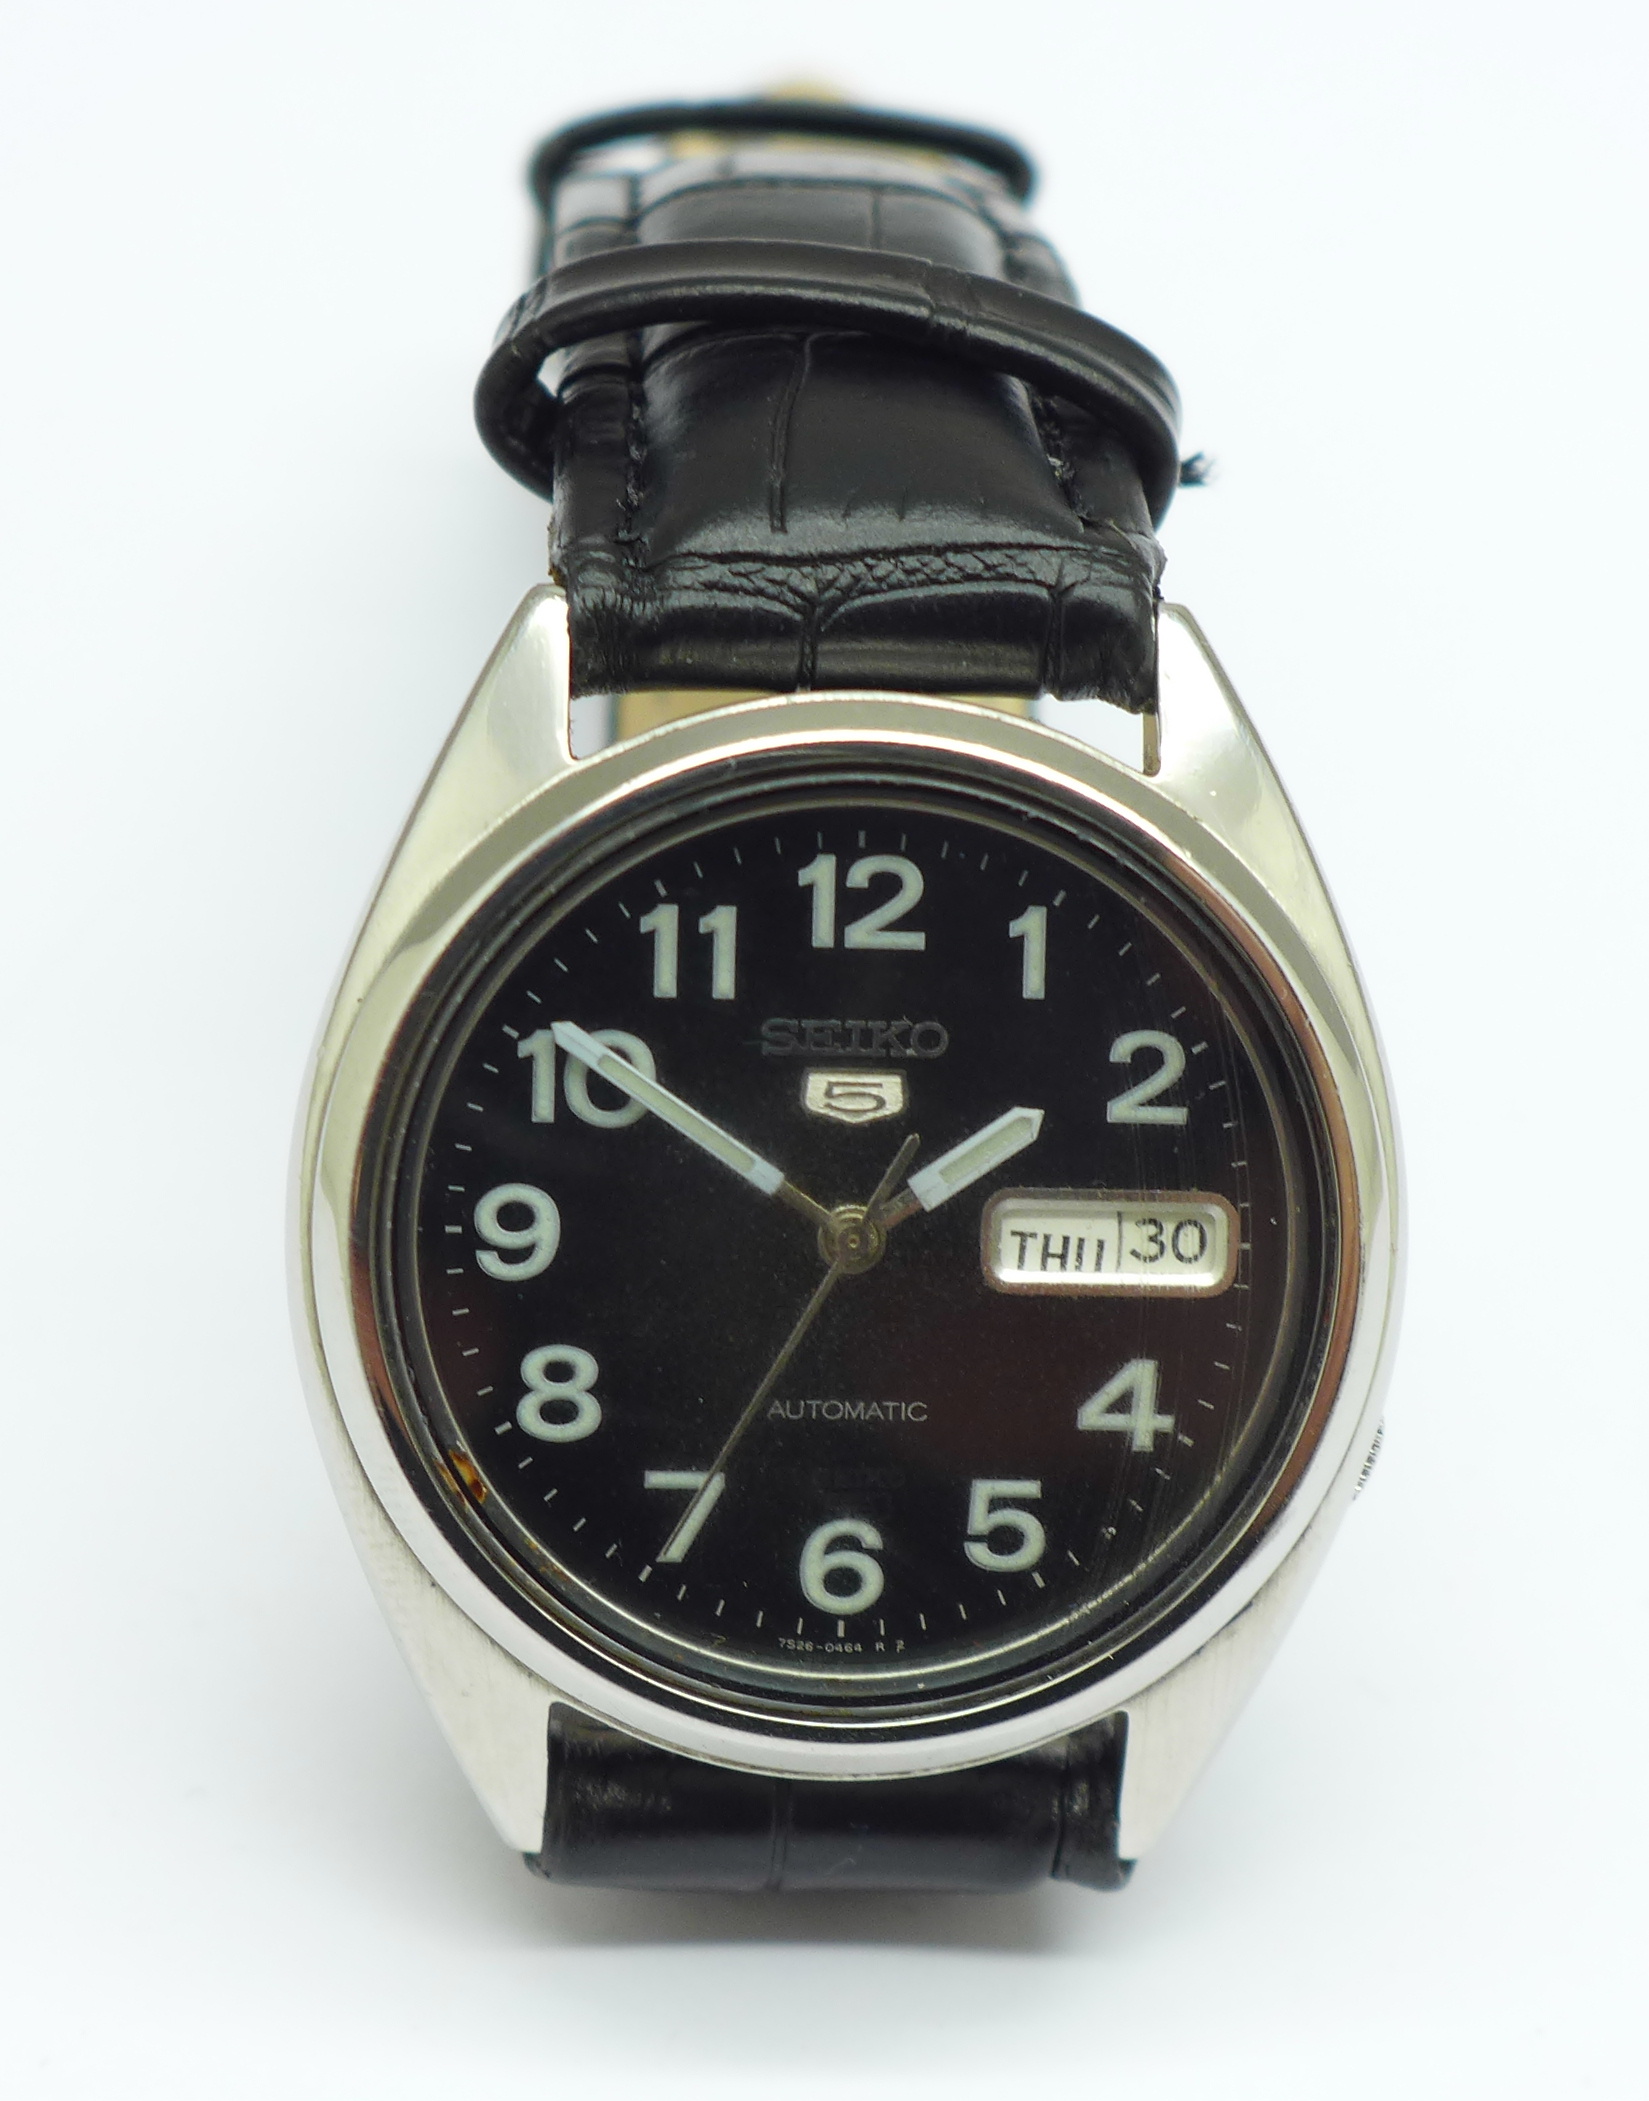 A Seiko 5 military style automatic wristwatch, 7S26